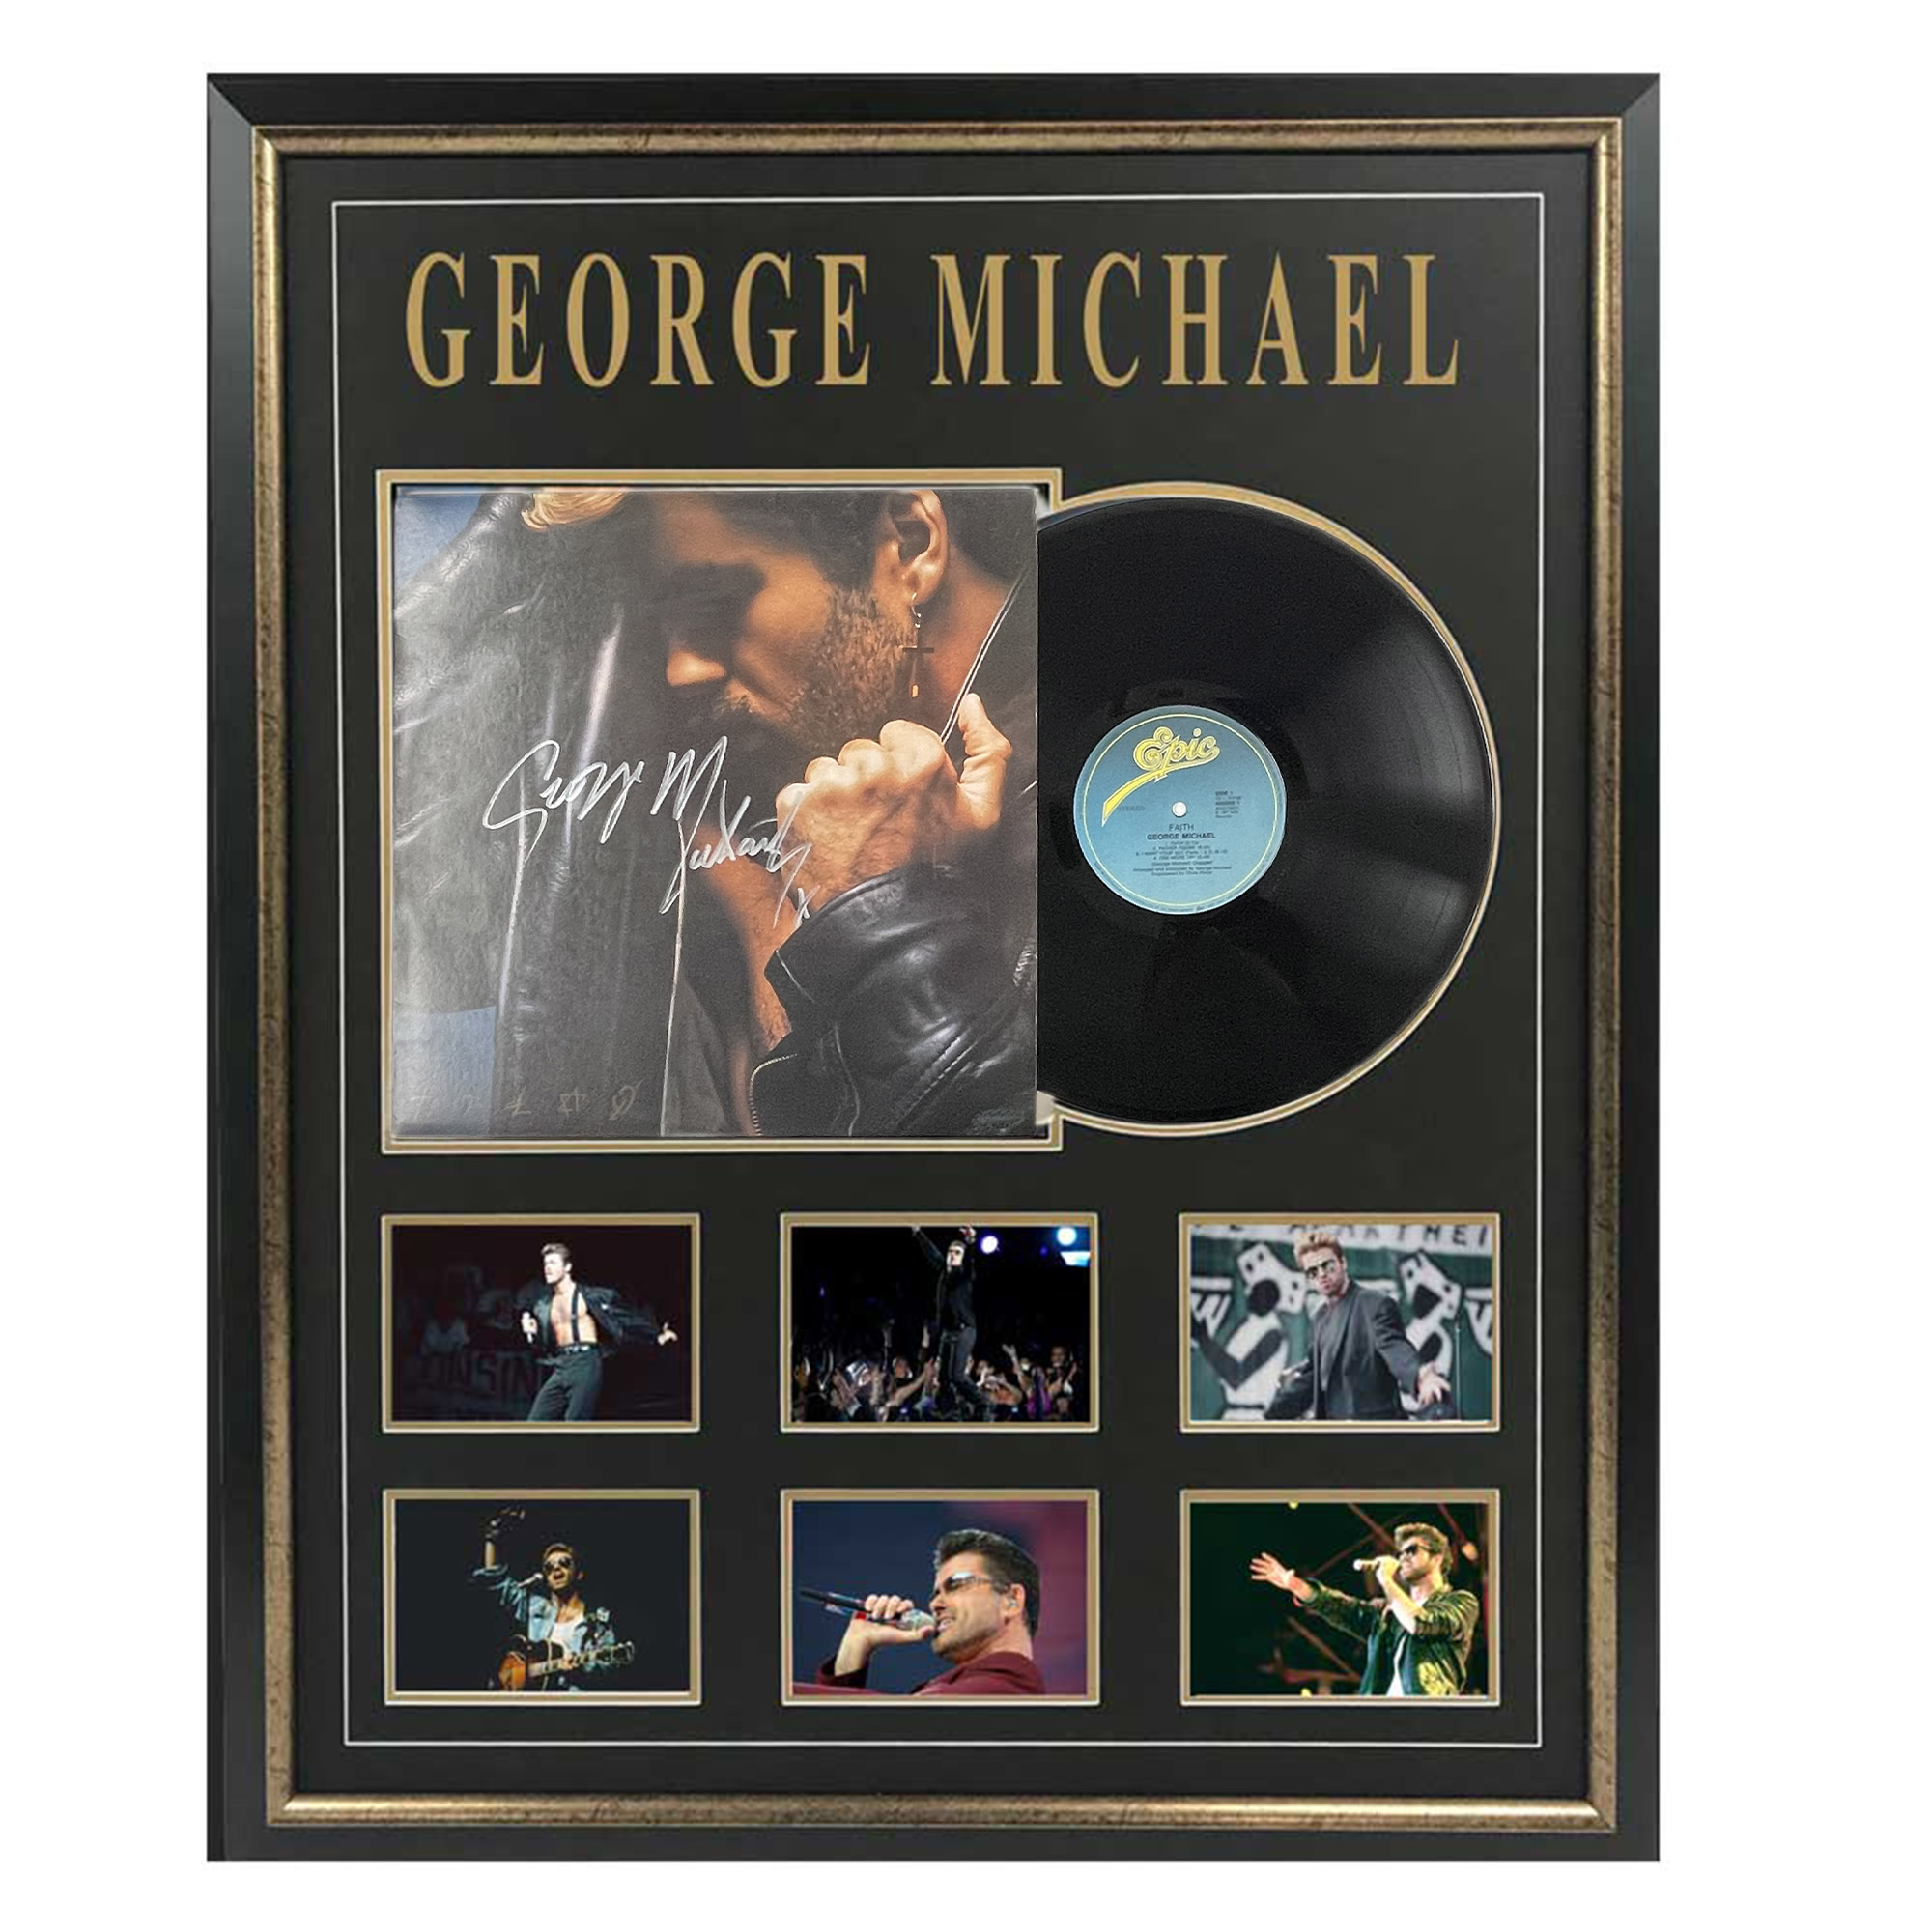 Music – George Michael – Faith Signed & Framed Album ...